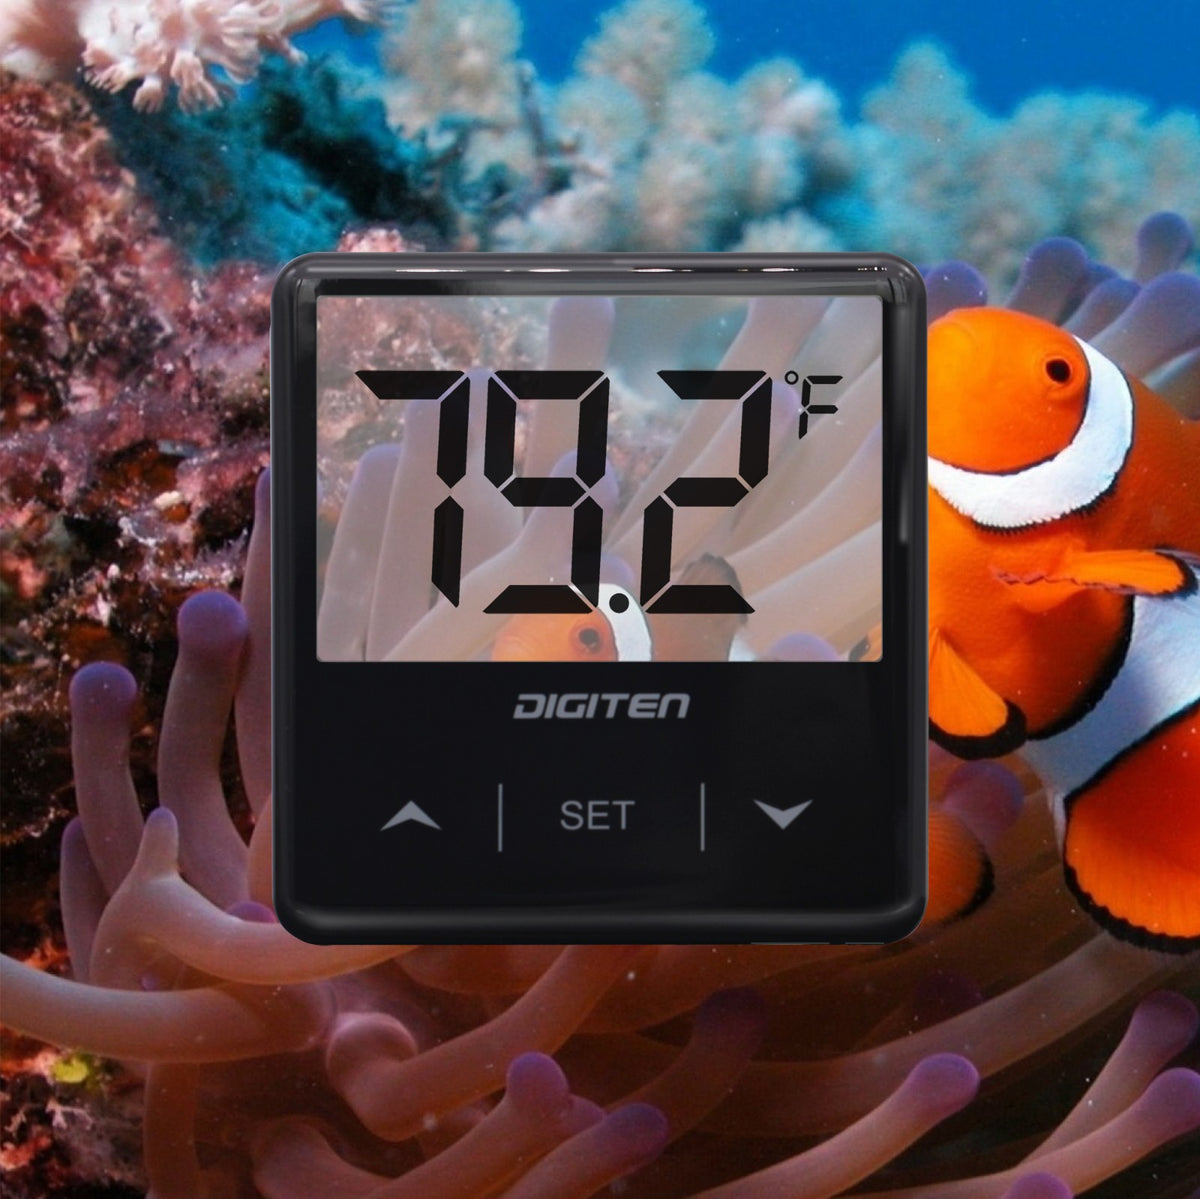 Oakton WD-90205-21 Digi-Sense Mini Digital Thermometers